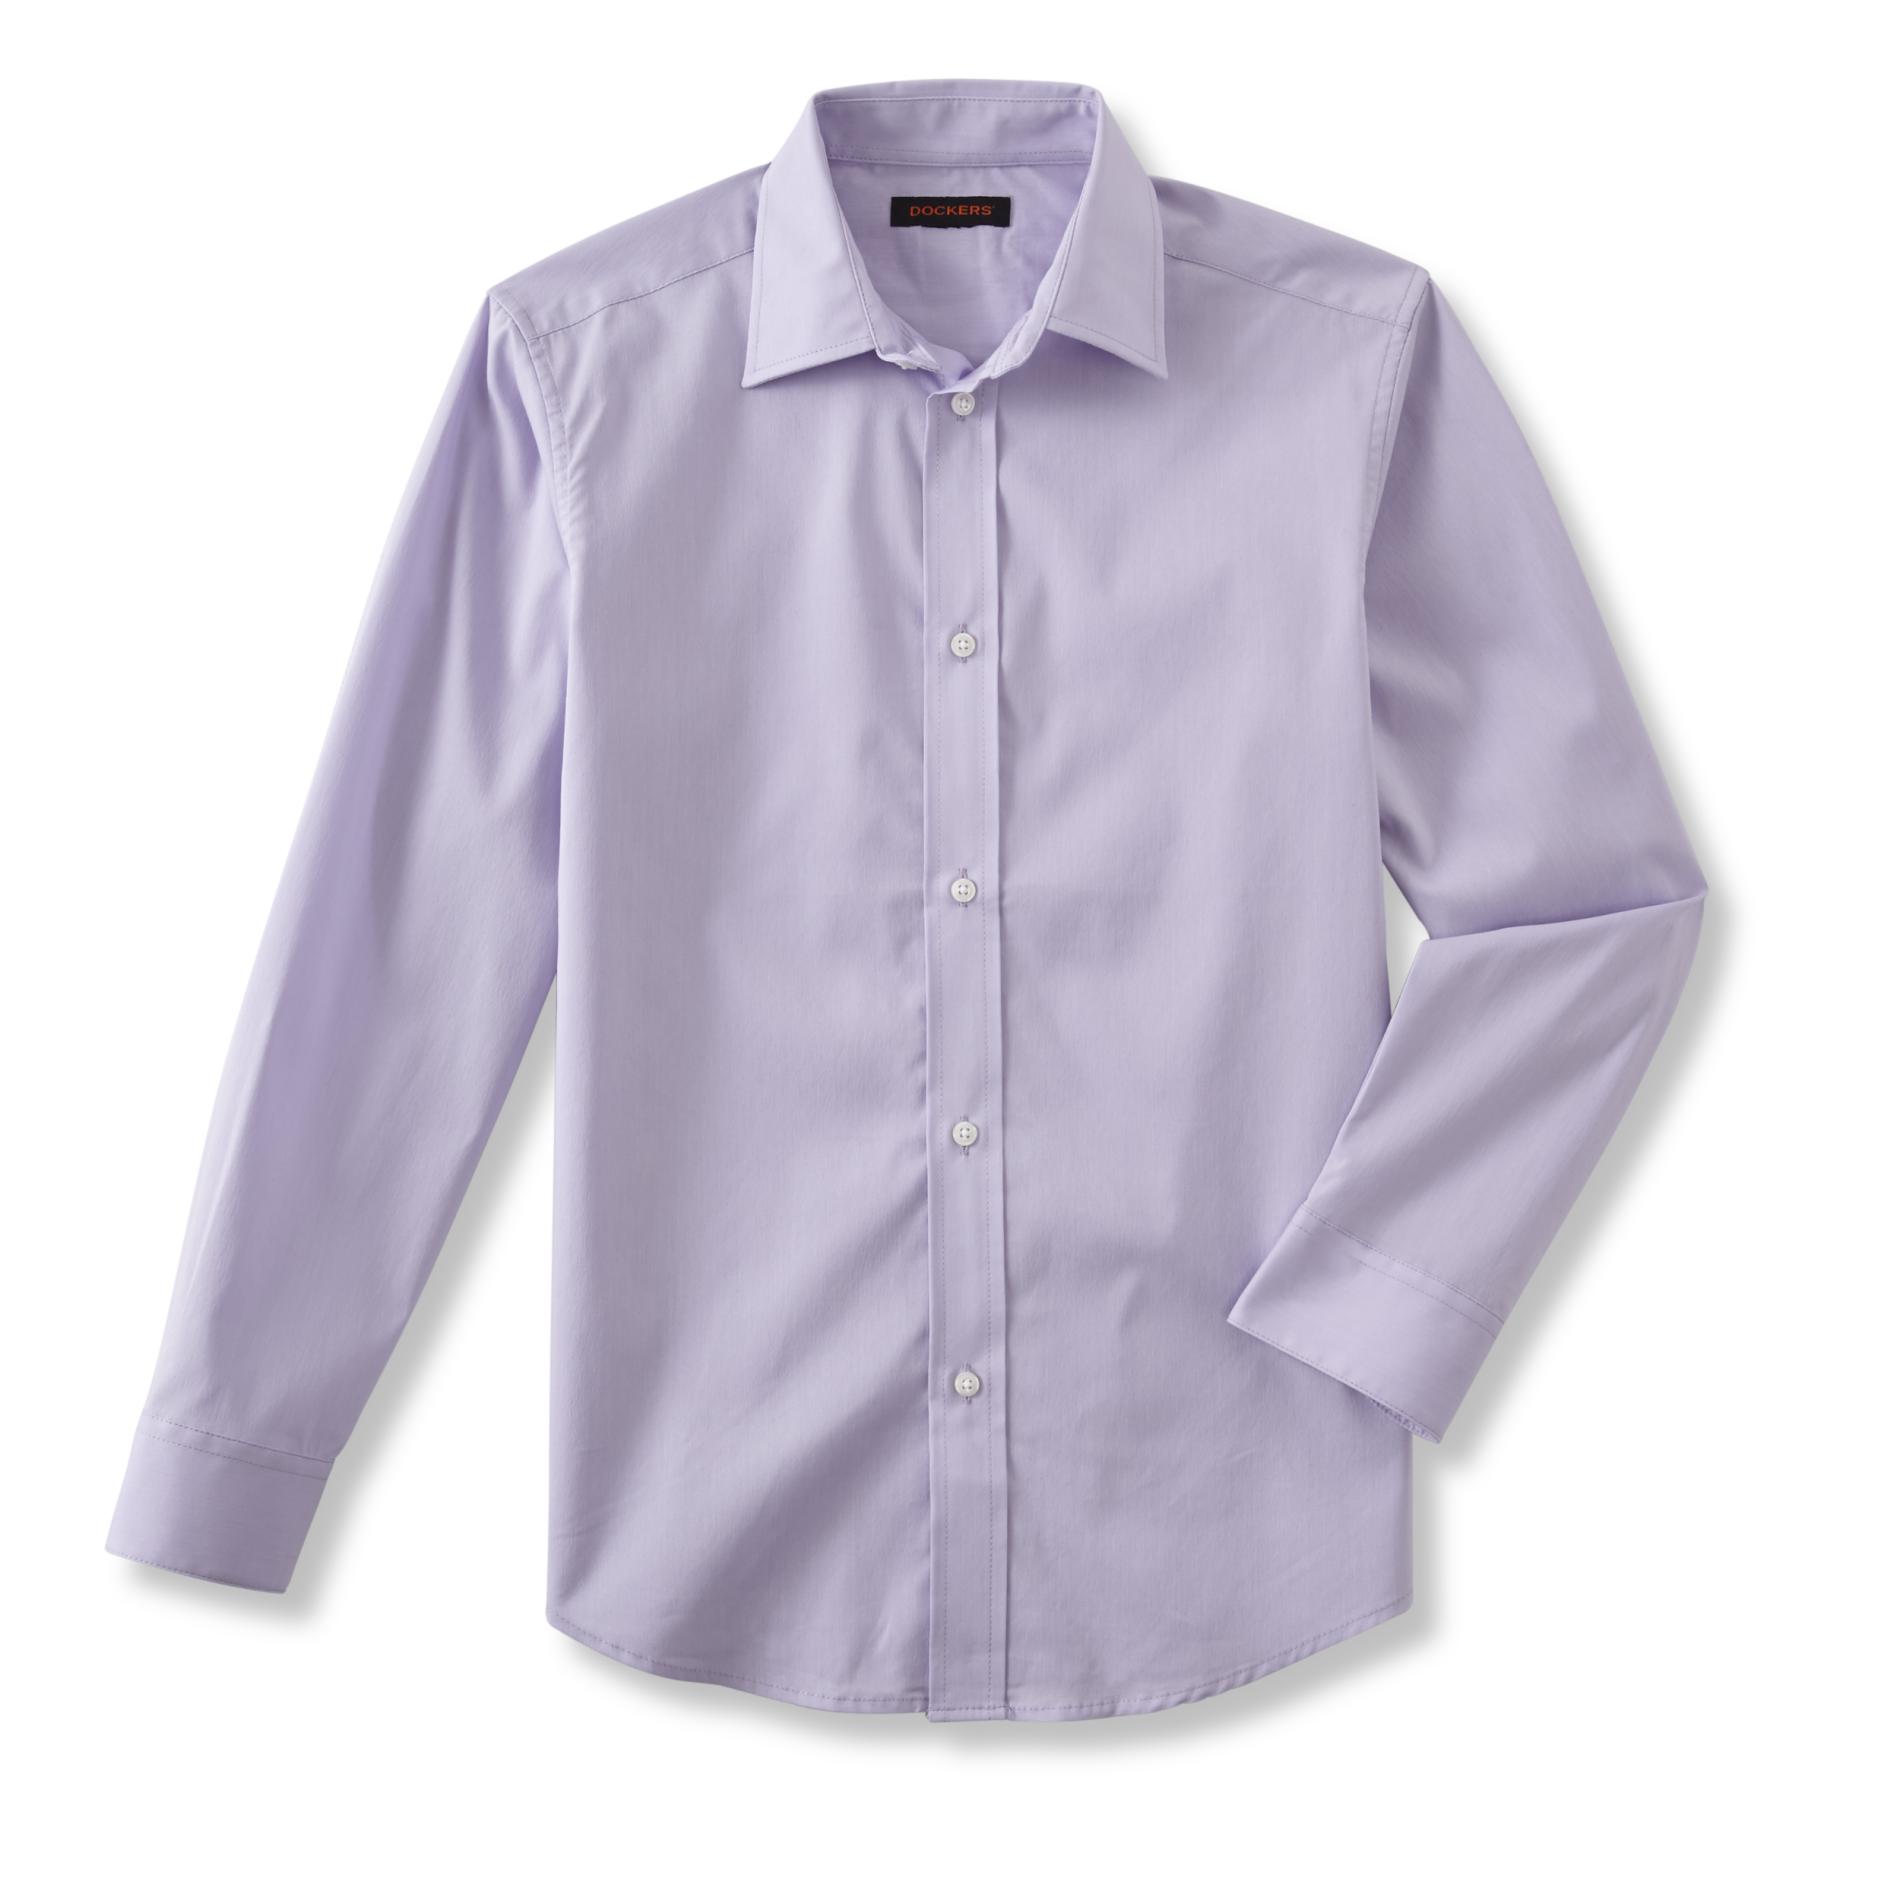 Dockers Boys' Button-Front Shirt